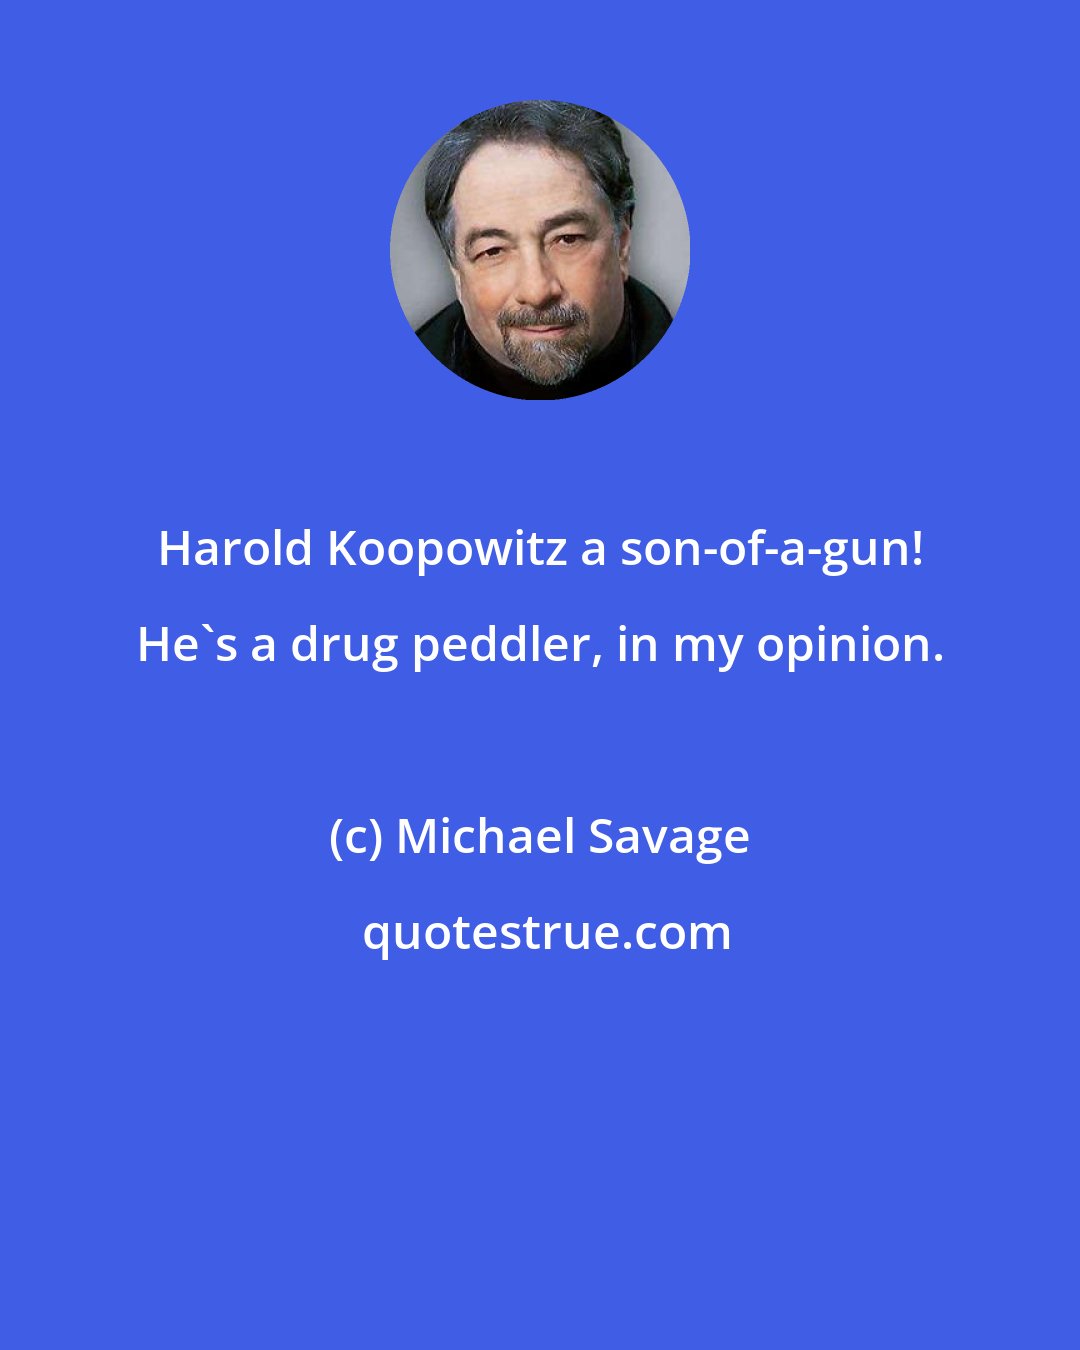 Michael Savage: Harold Koopowitz a son-of-a-gun! He's a drug peddler, in my opinion.